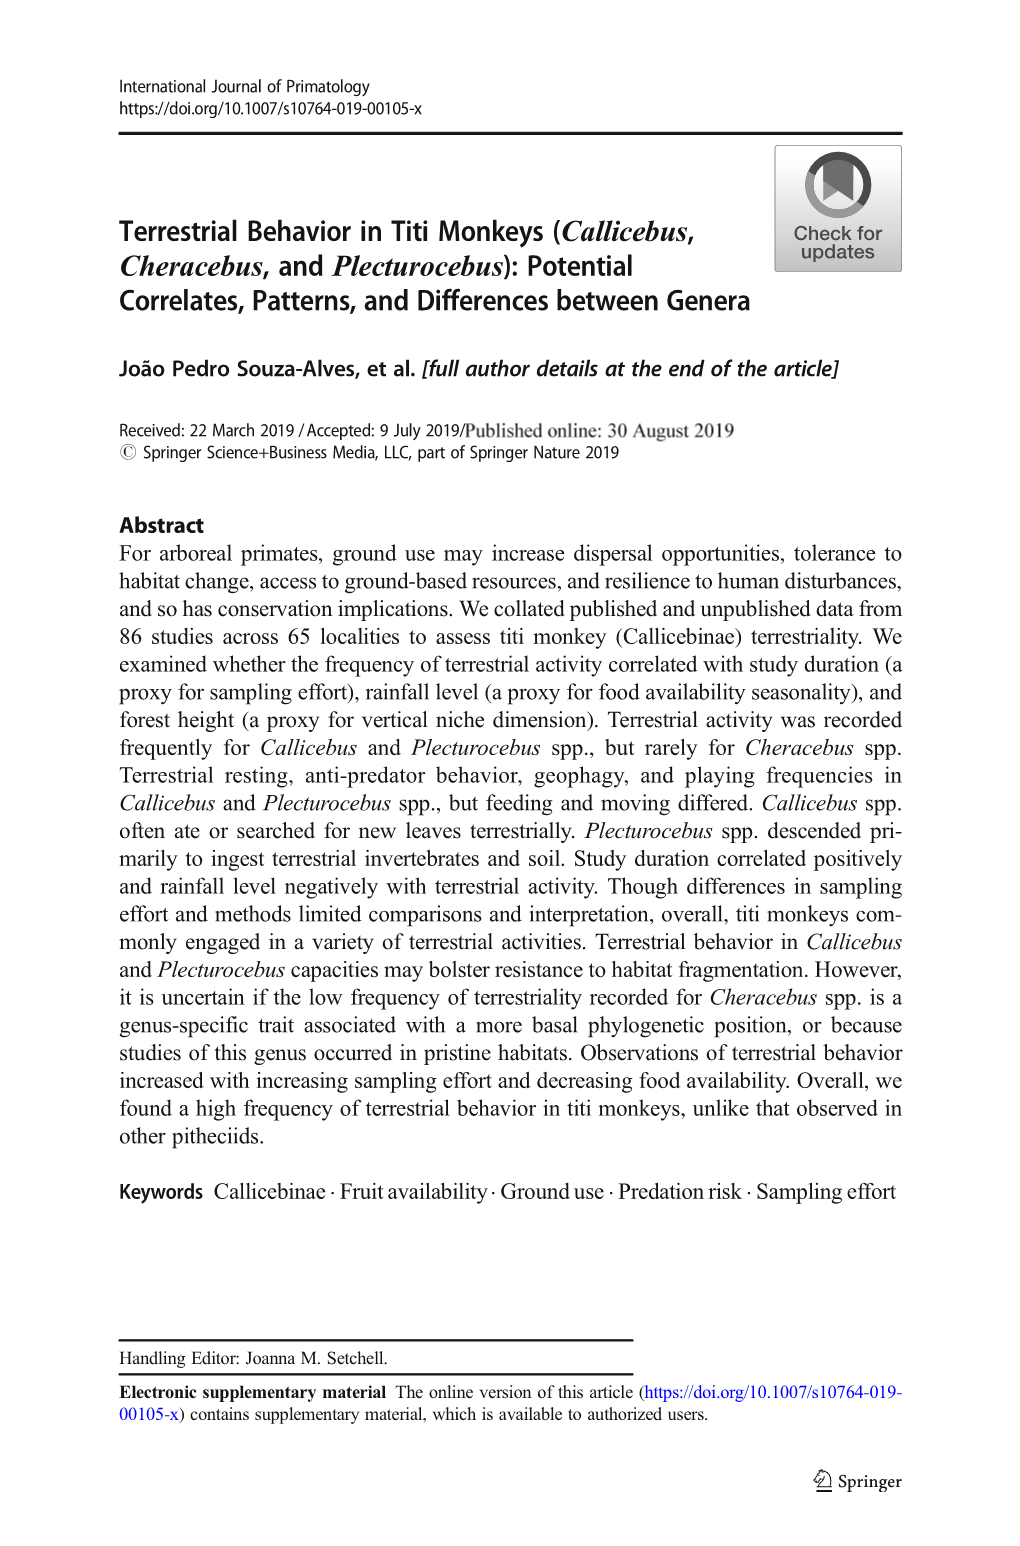 Terrestrial Behavior in Titi Monkeys (Callicebus, Cheracebus,Andplecturocebus): Potential Correlates, Patterns, and Differences Between Genera